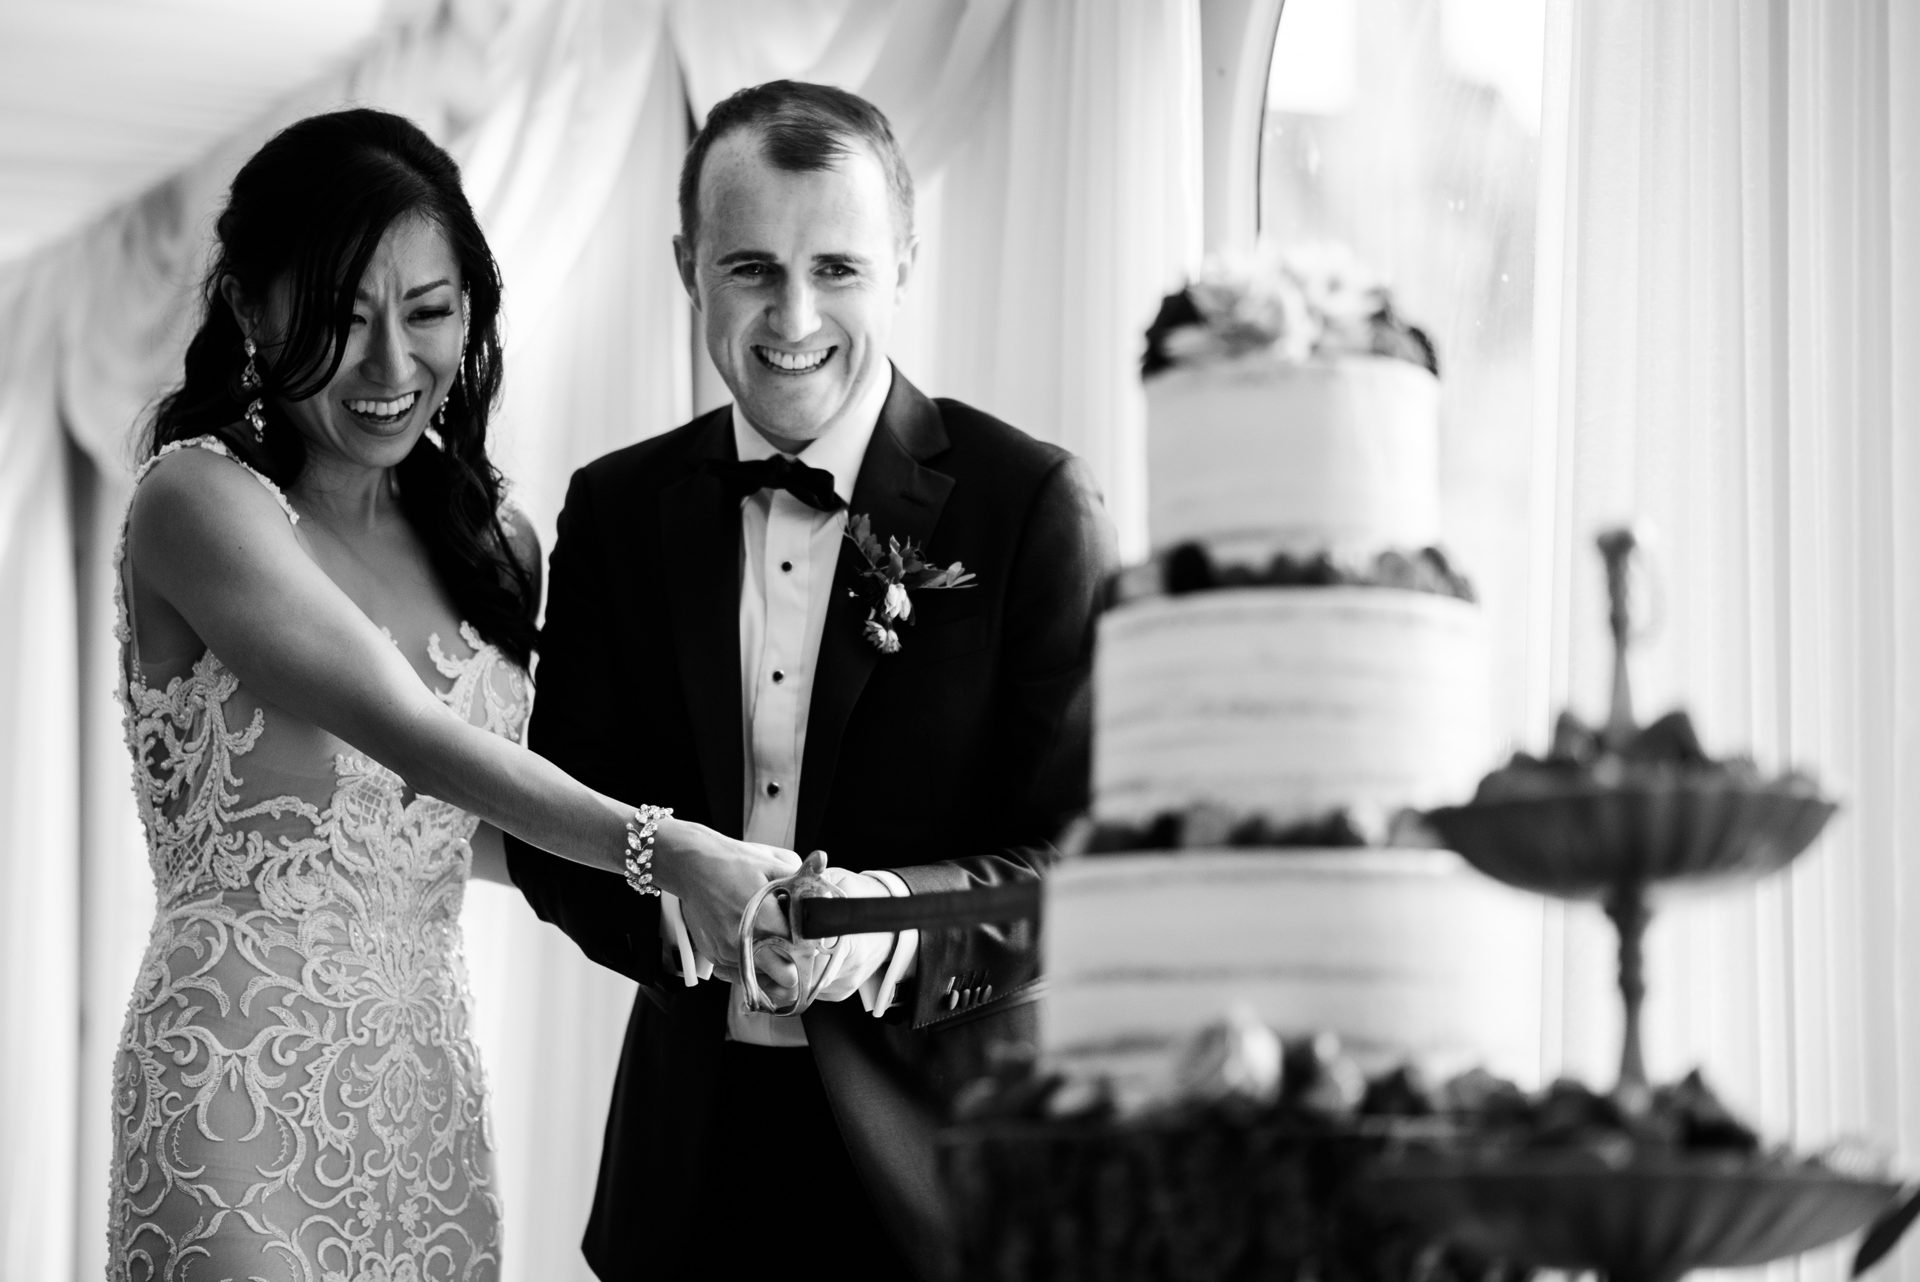 Newlyweds cut wedding cake together with sword